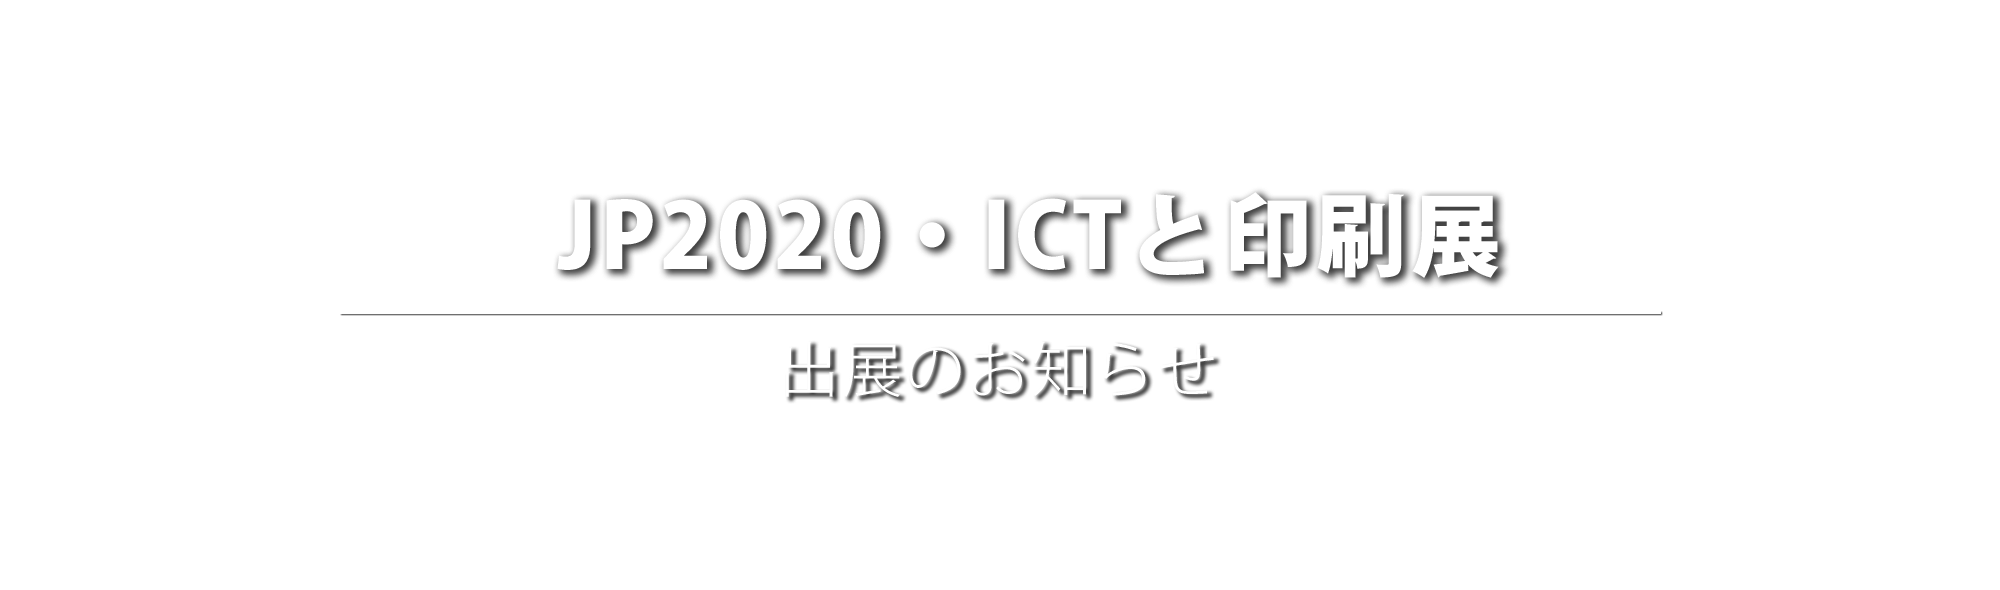 JP2020・ICTと印刷展 出展のお知らせ